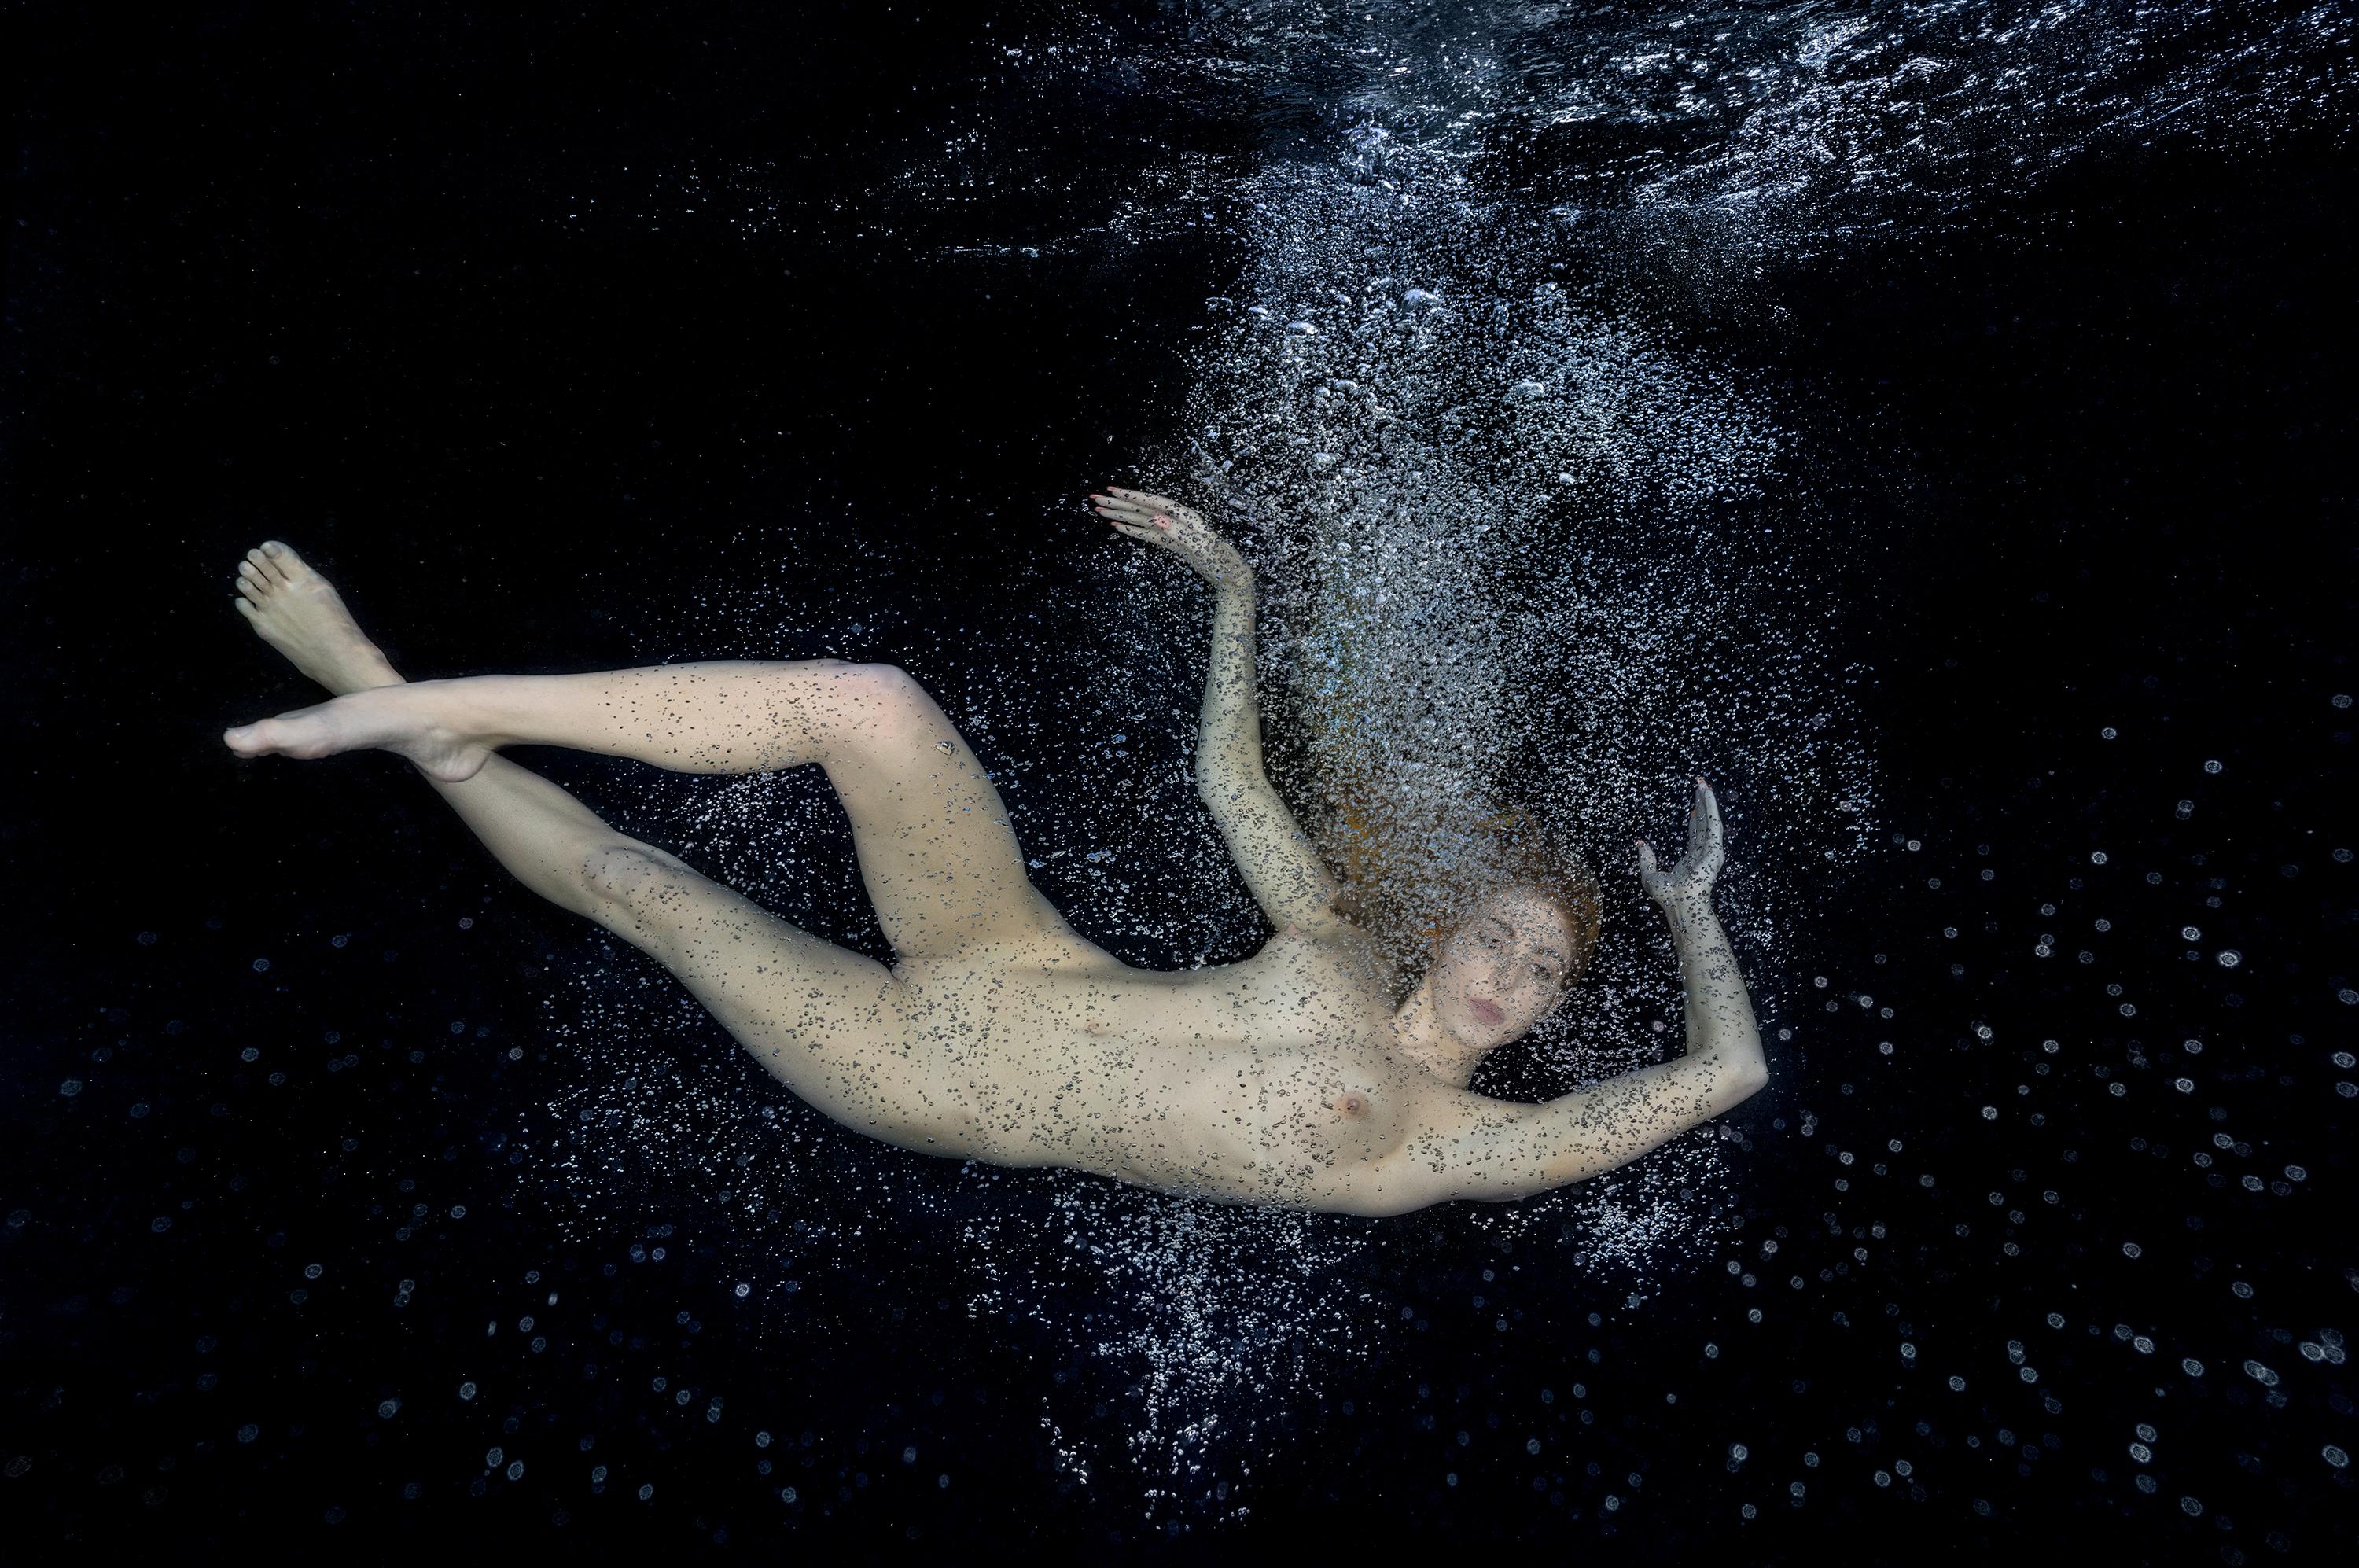 Alex Sher Figurative Photograph - Danae - underwater nude photograph - archival pigment 17" x 24"